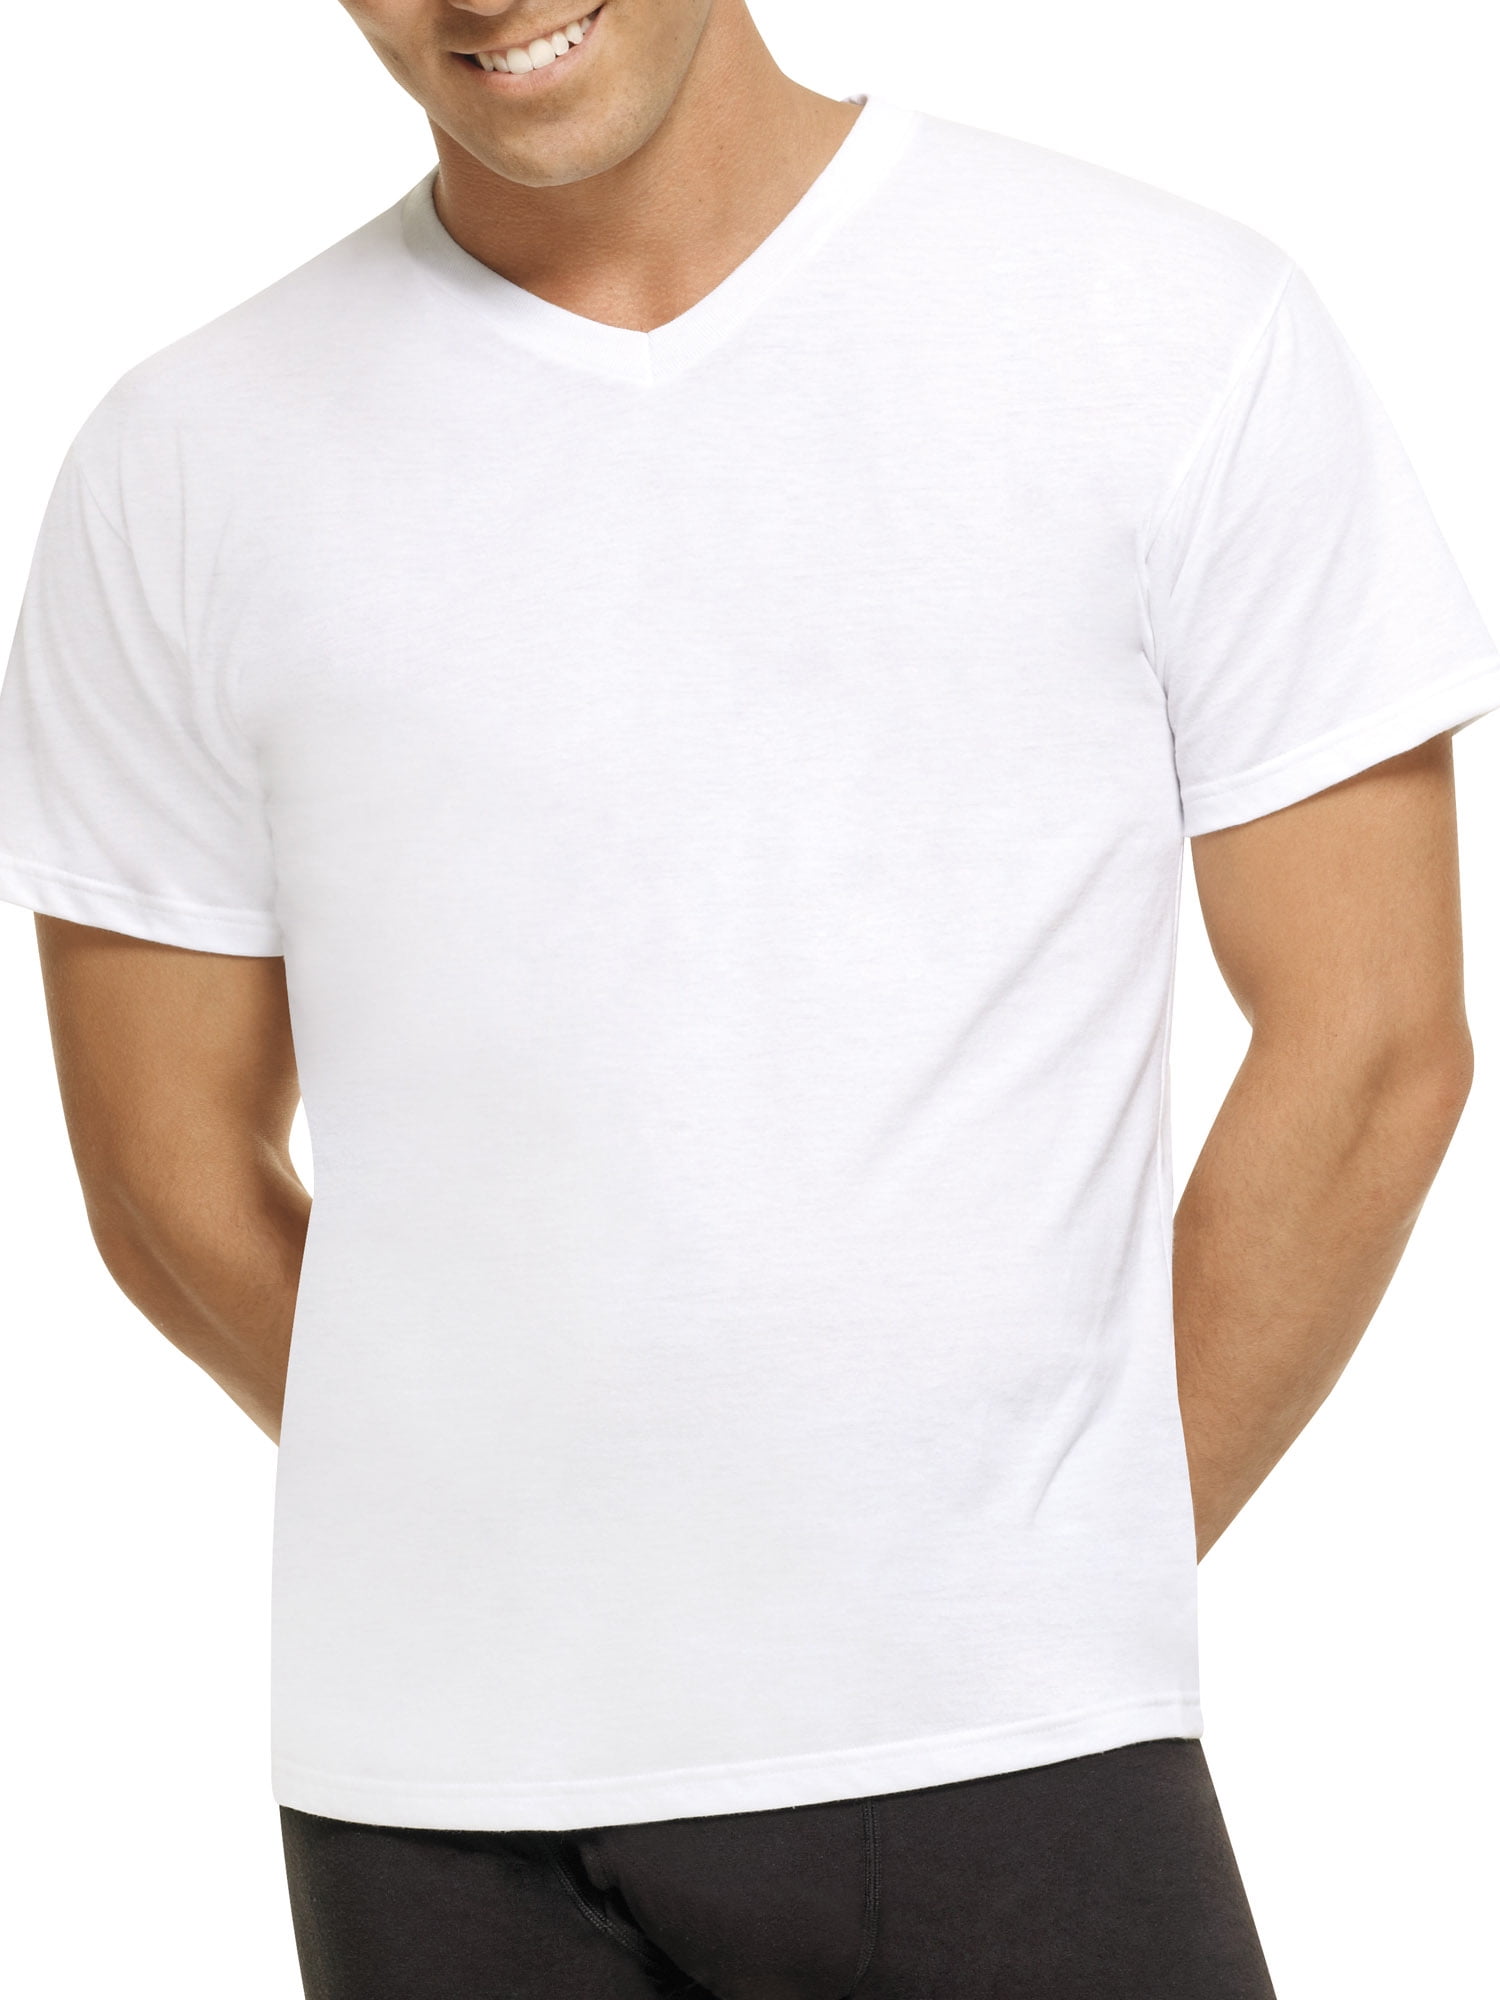 Mens ComfortBlend White V-Neck T-Shirts 2XL, 4 Pack - Walmart.com